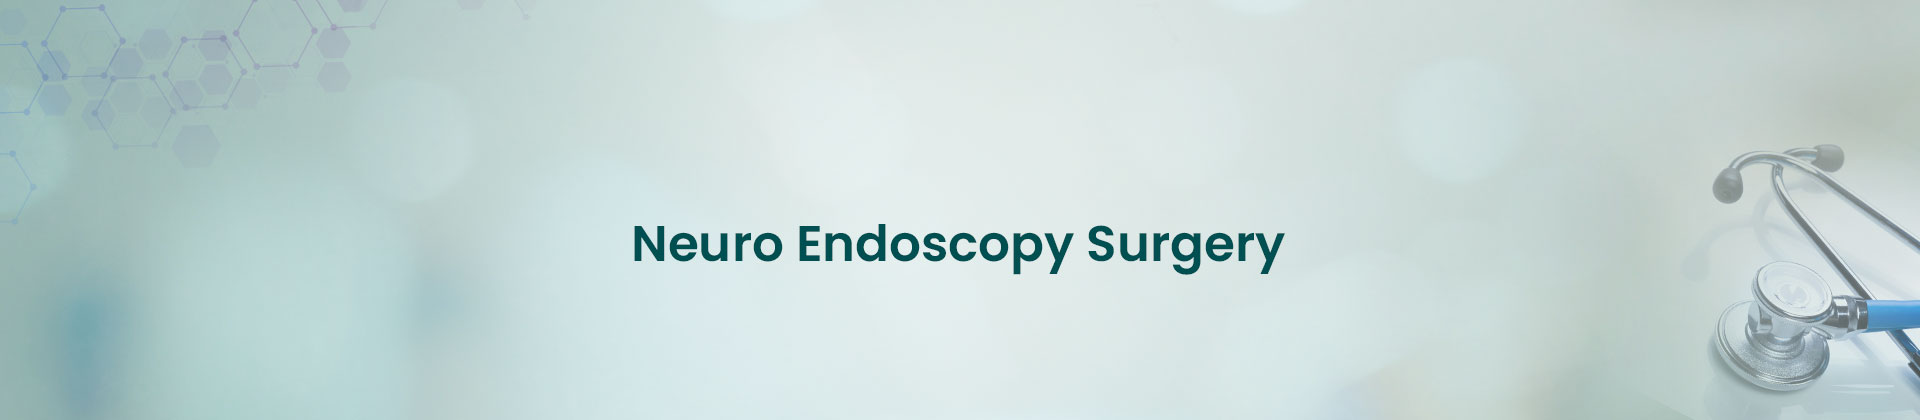 Neuro-endoscopy Surgery